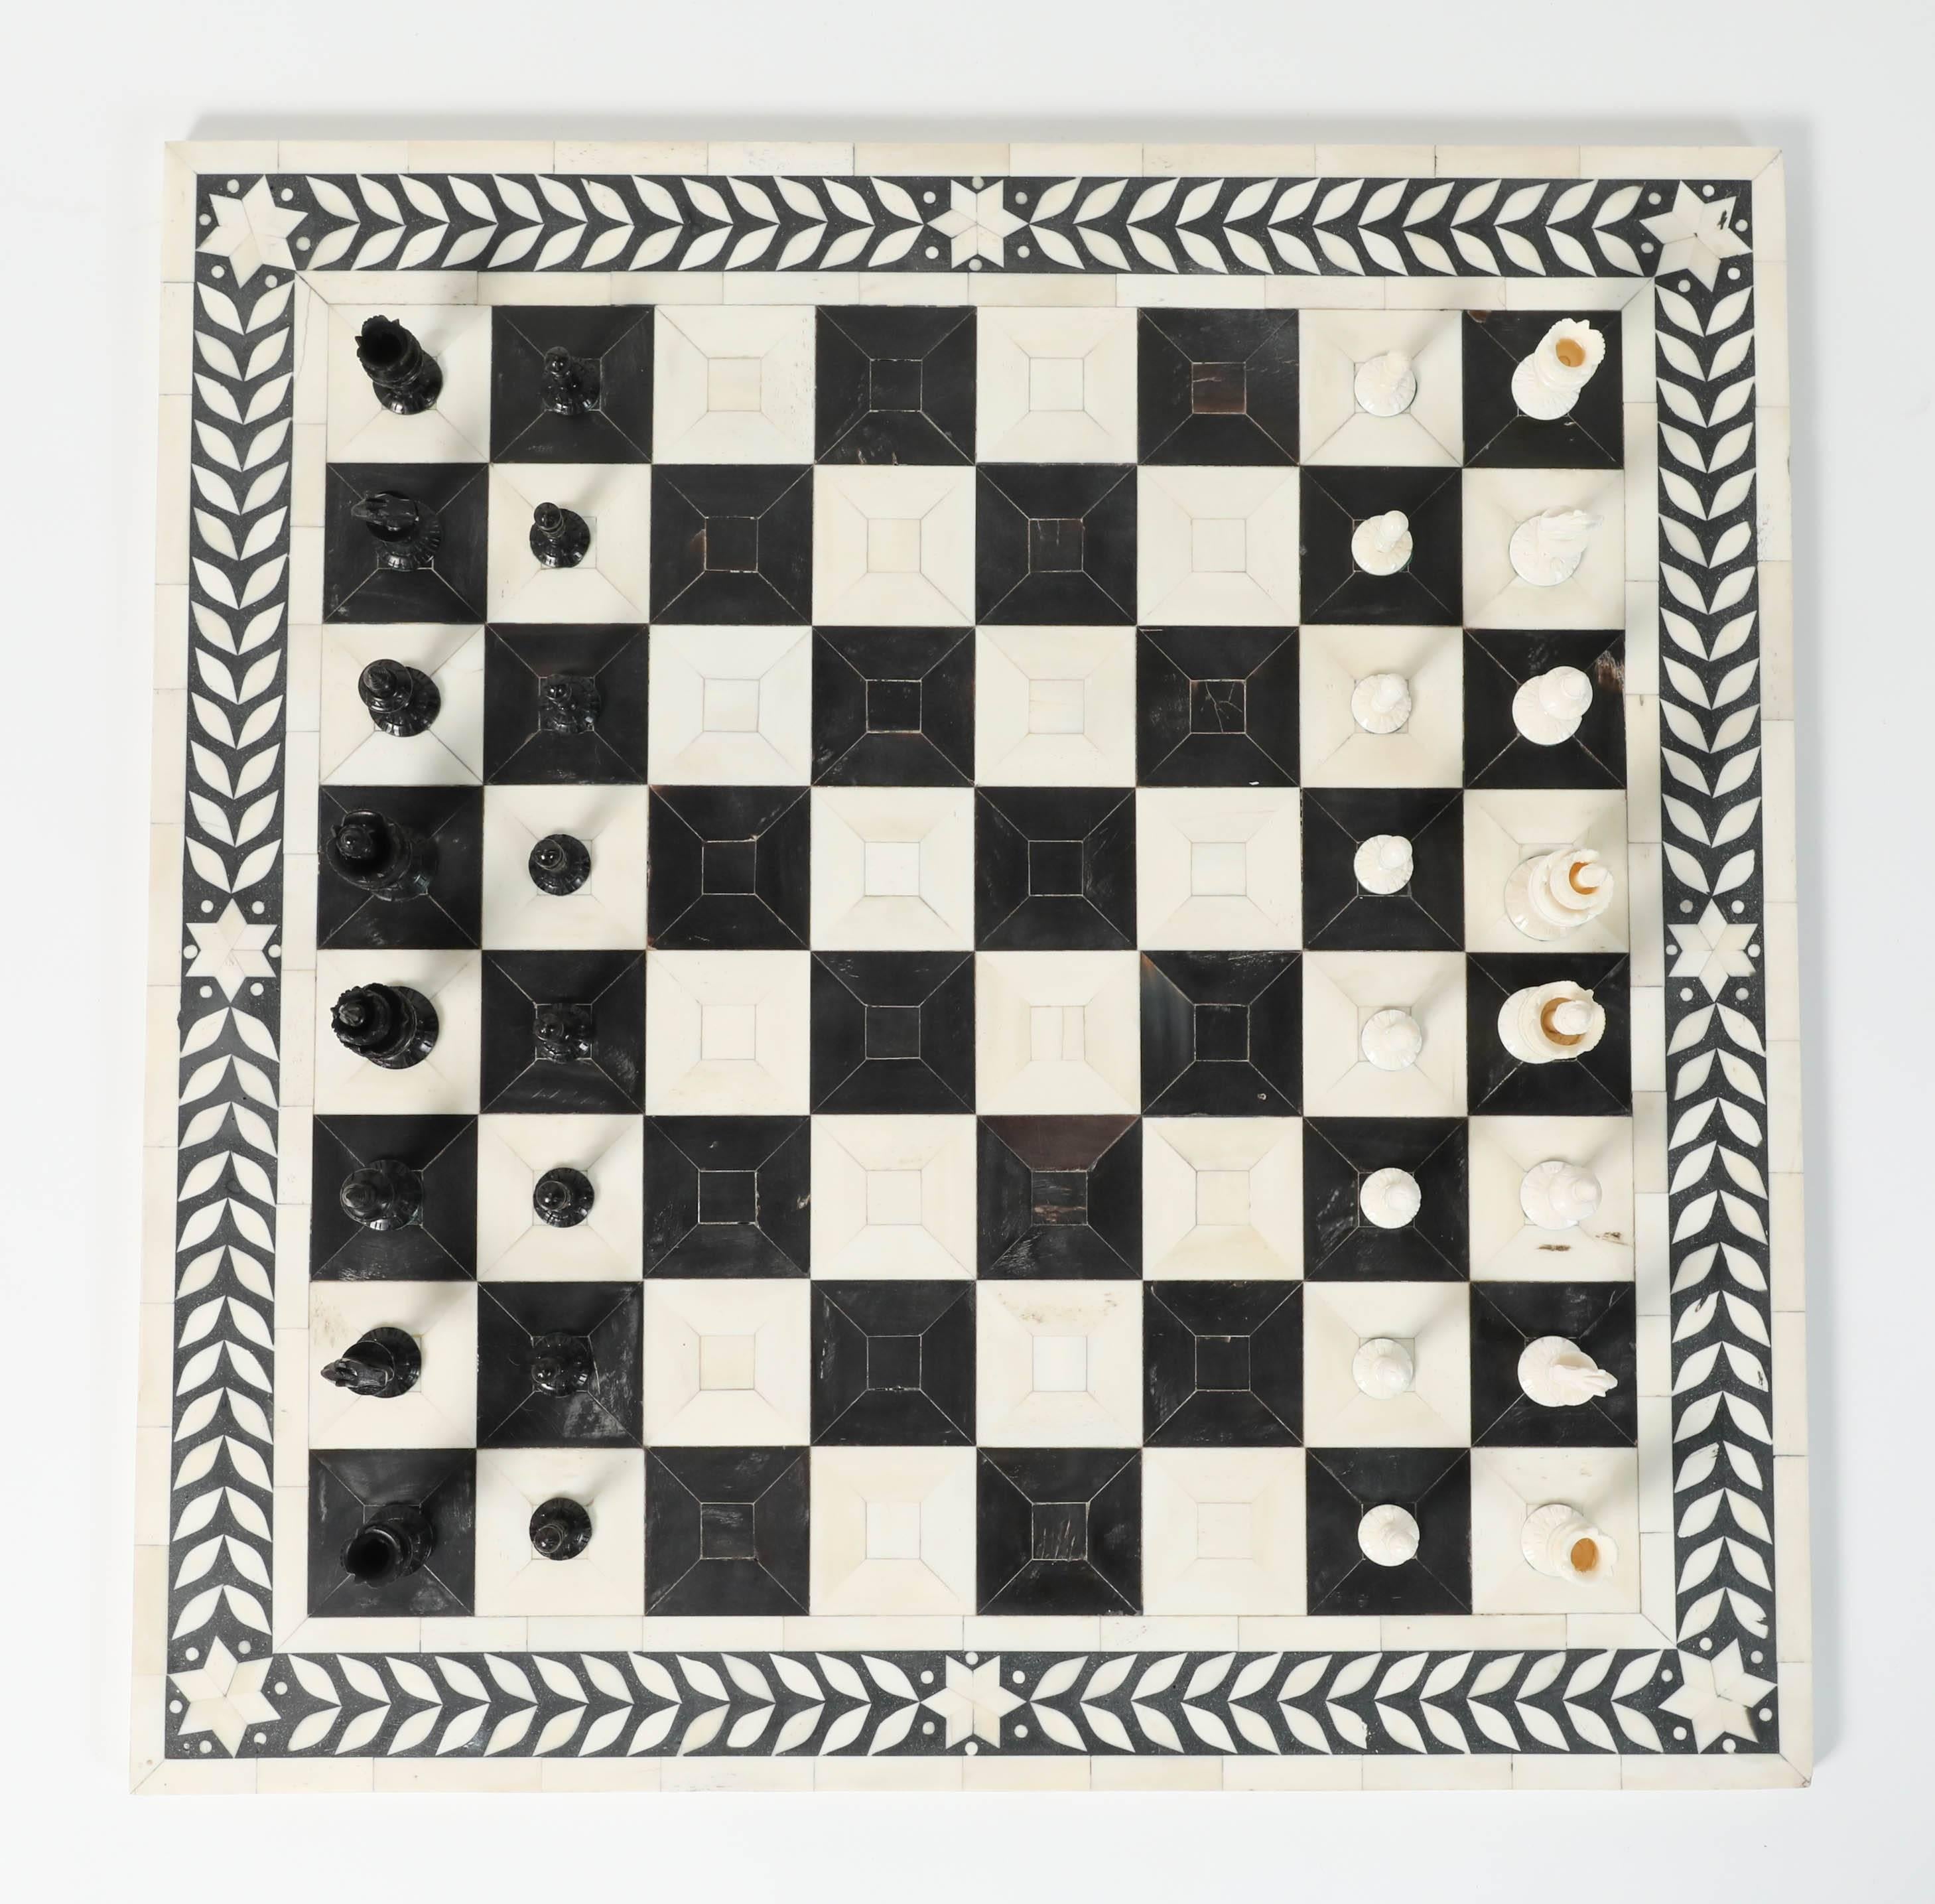 bone chess sets india